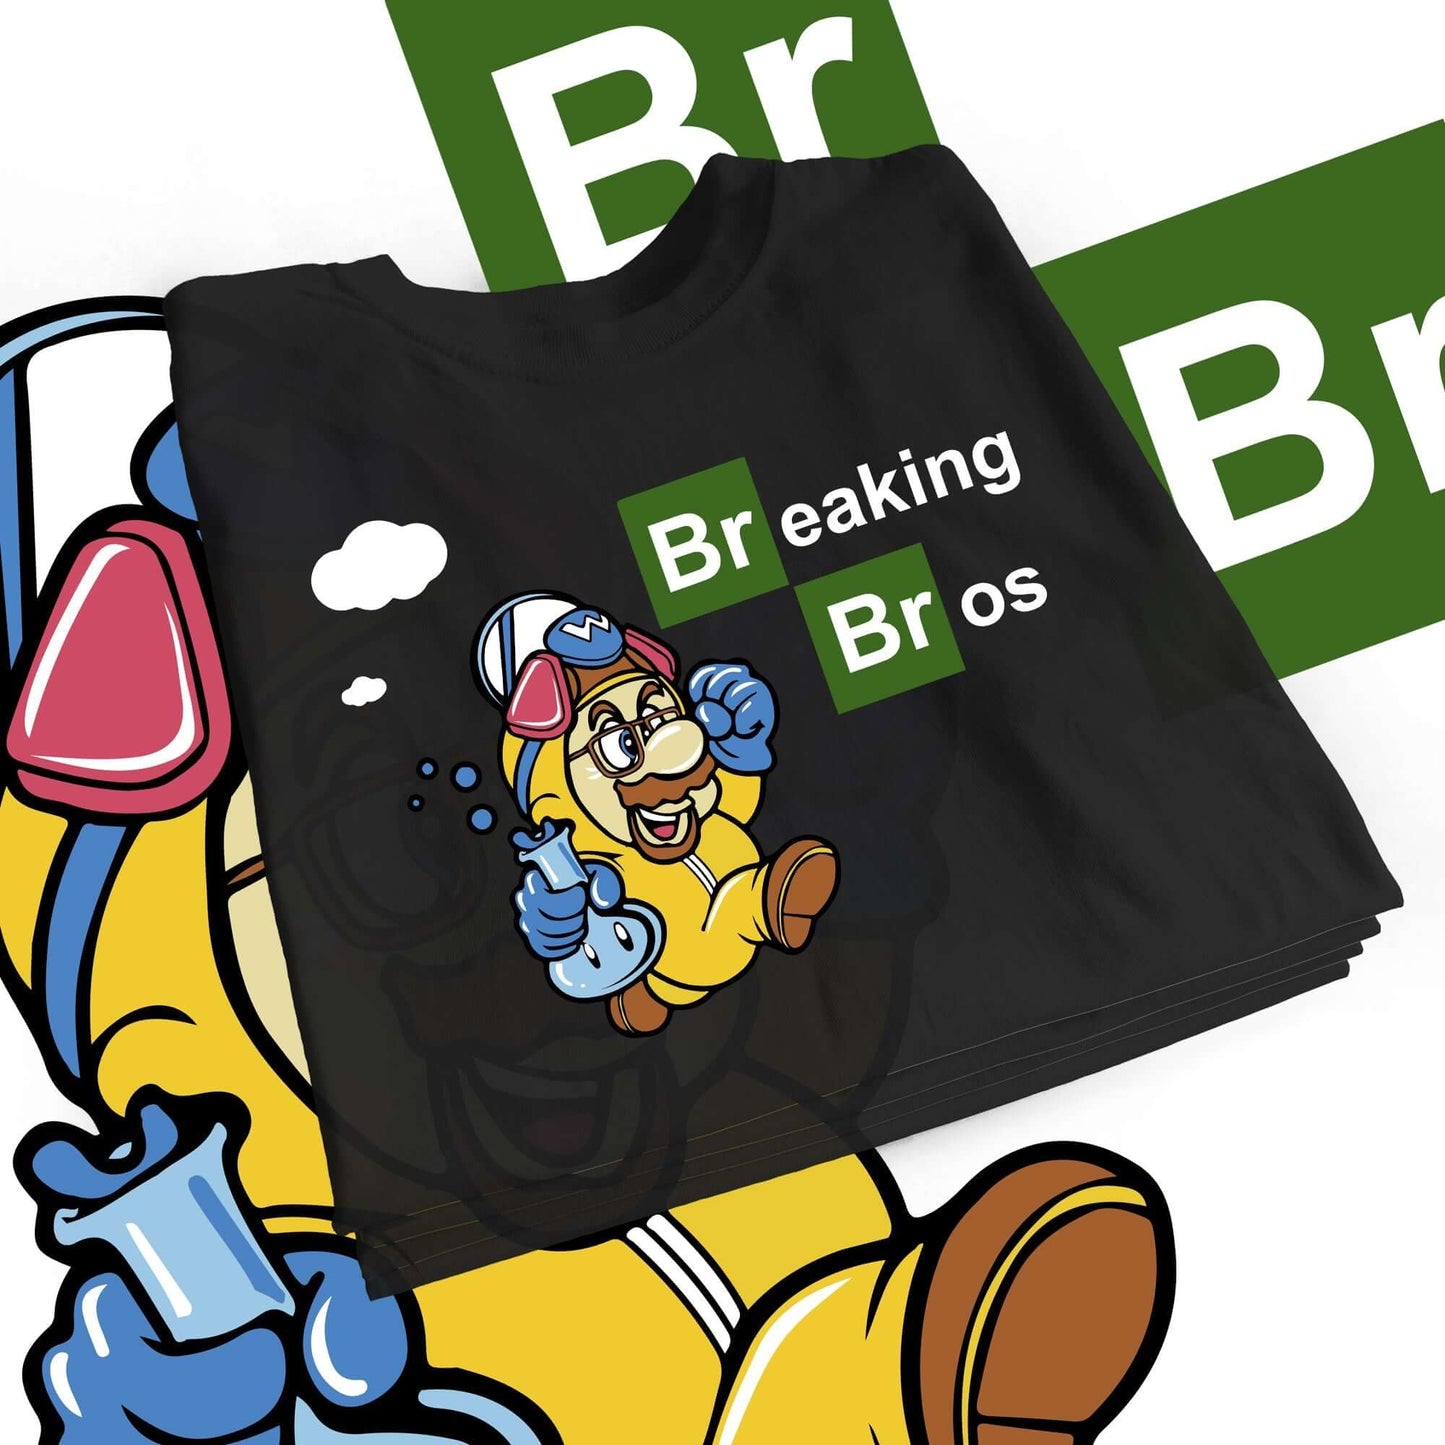 Breaking Bros (Mario)-DaPrintFactory